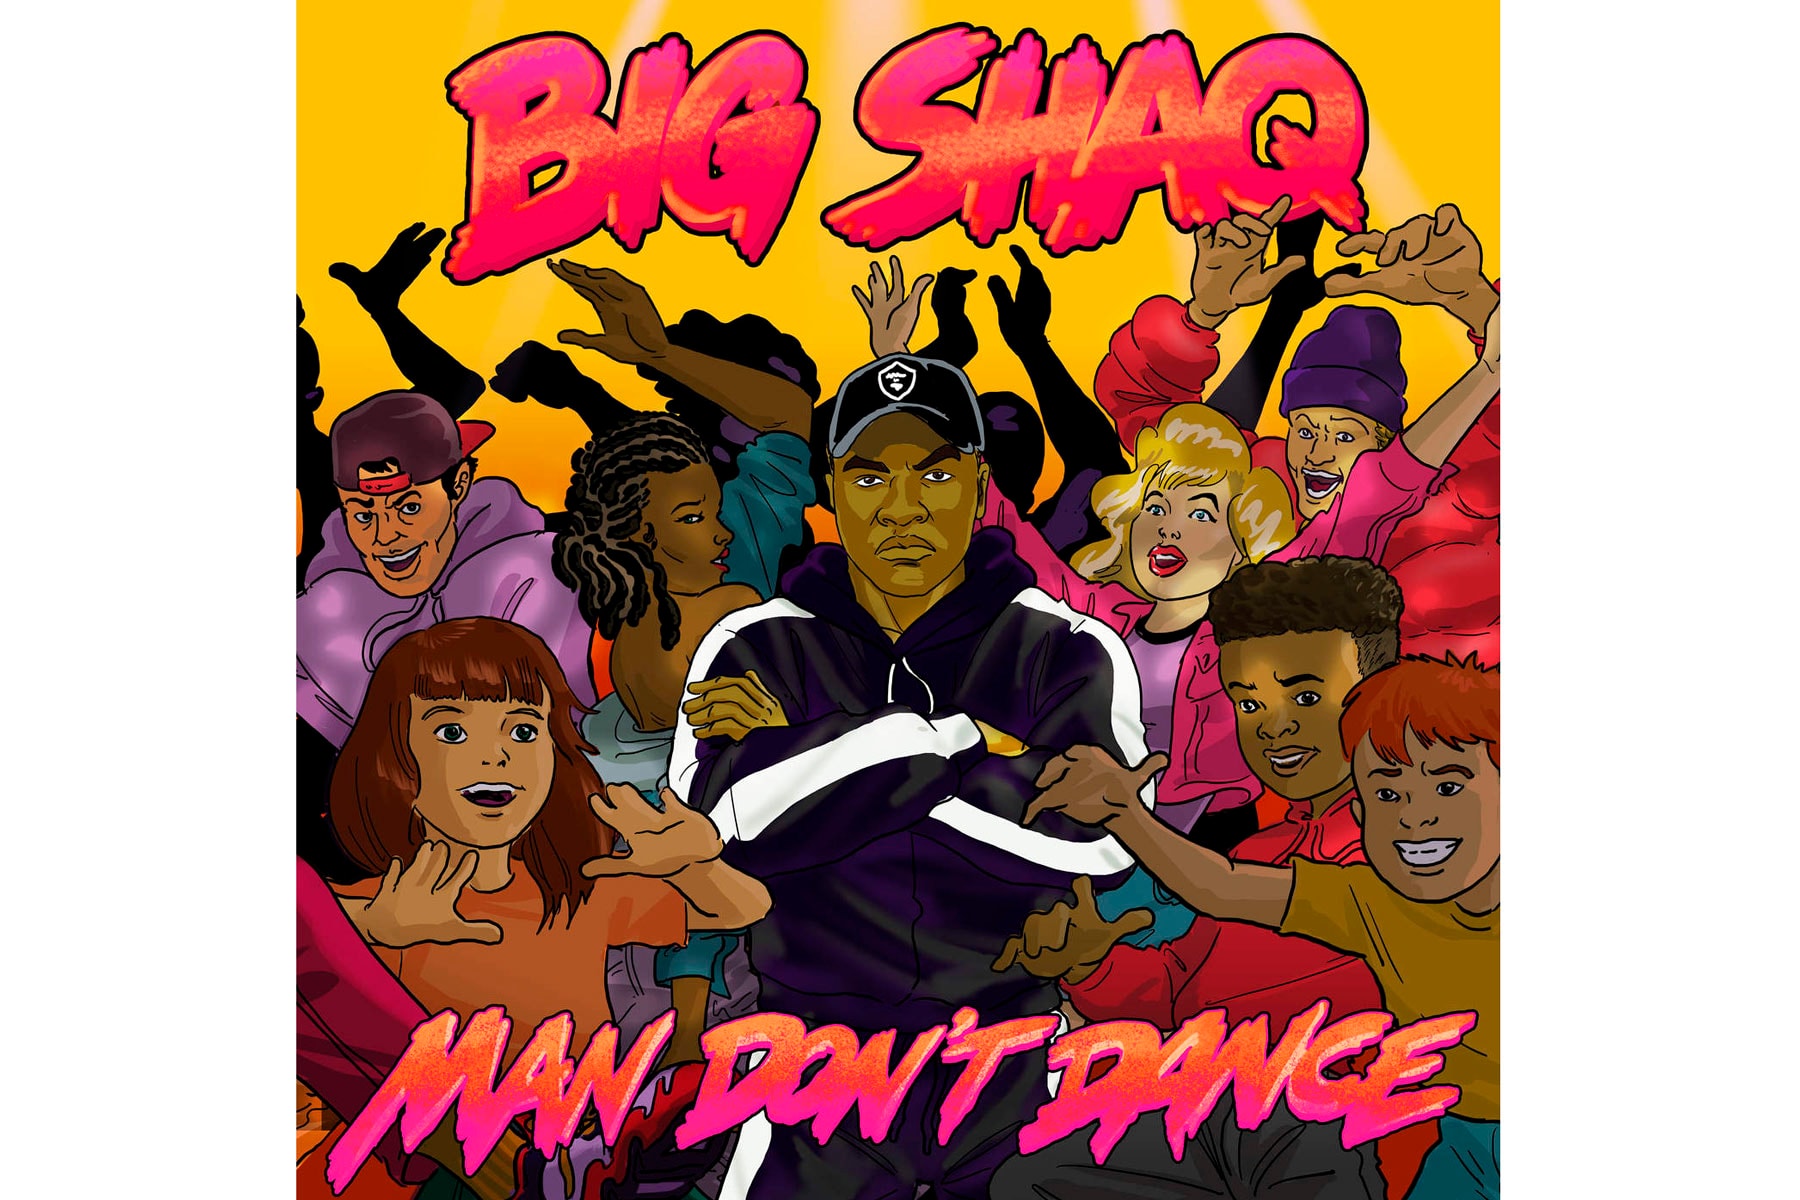 Big Shaq man don't dance single